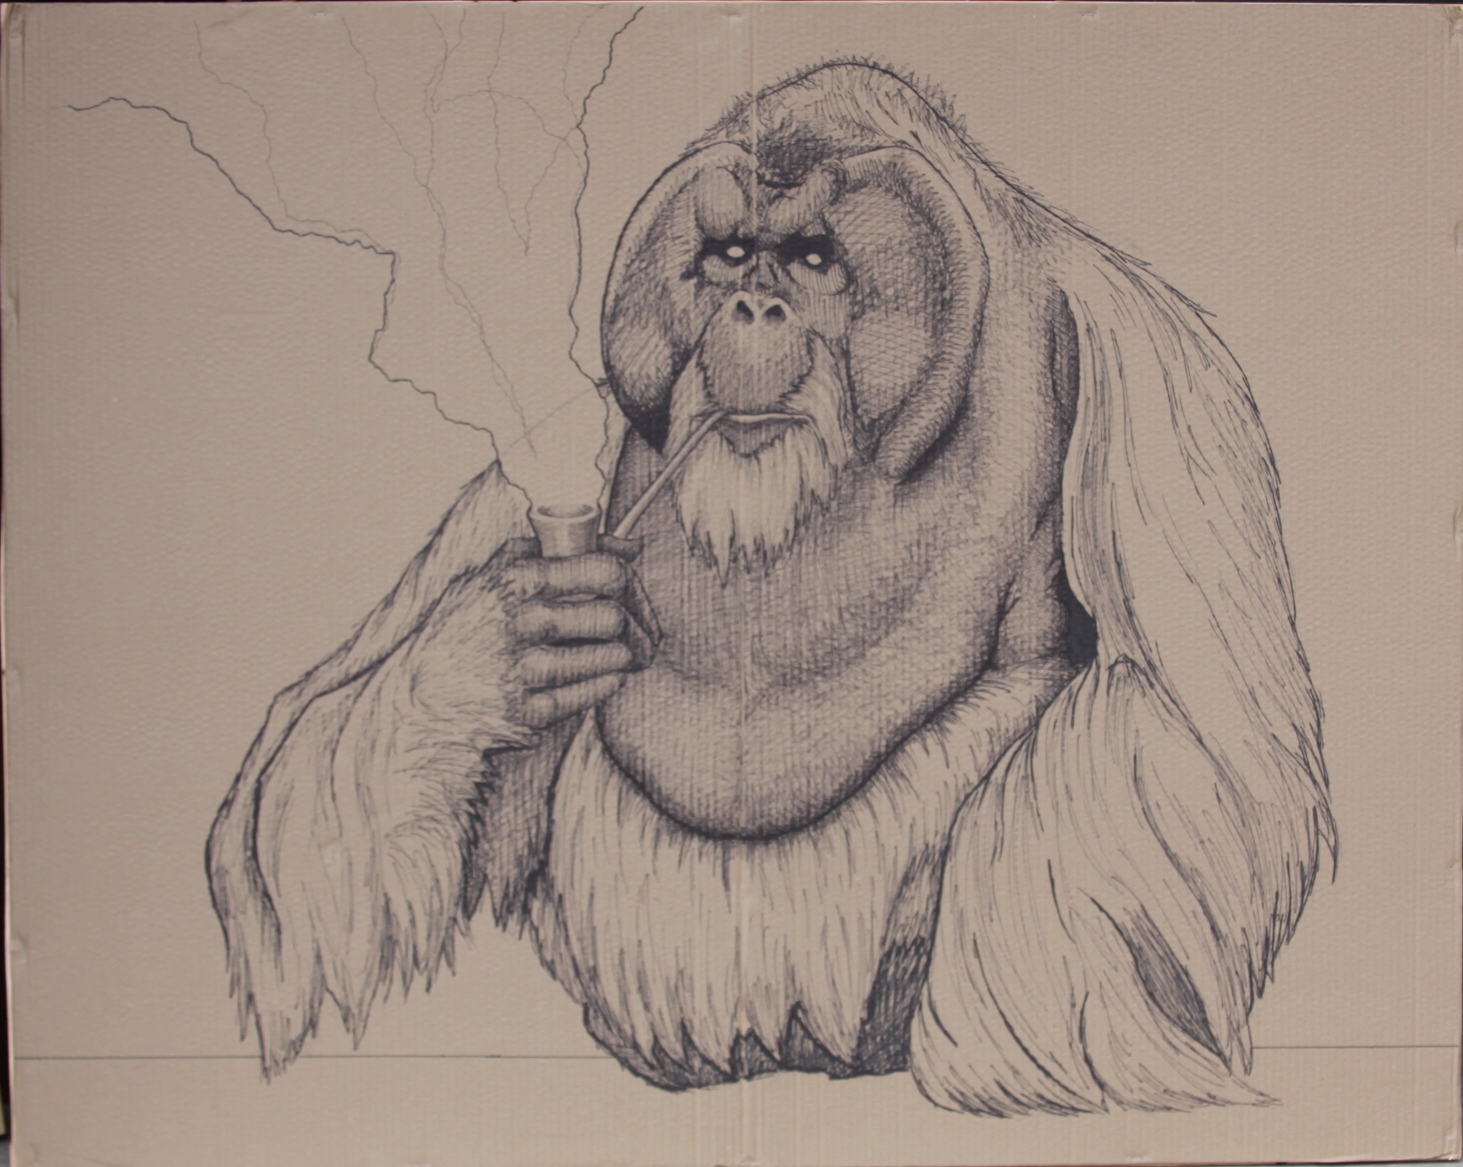   Orangutan with Pipe   2015  Sharpie on cardboard&nbsp;  60x48 